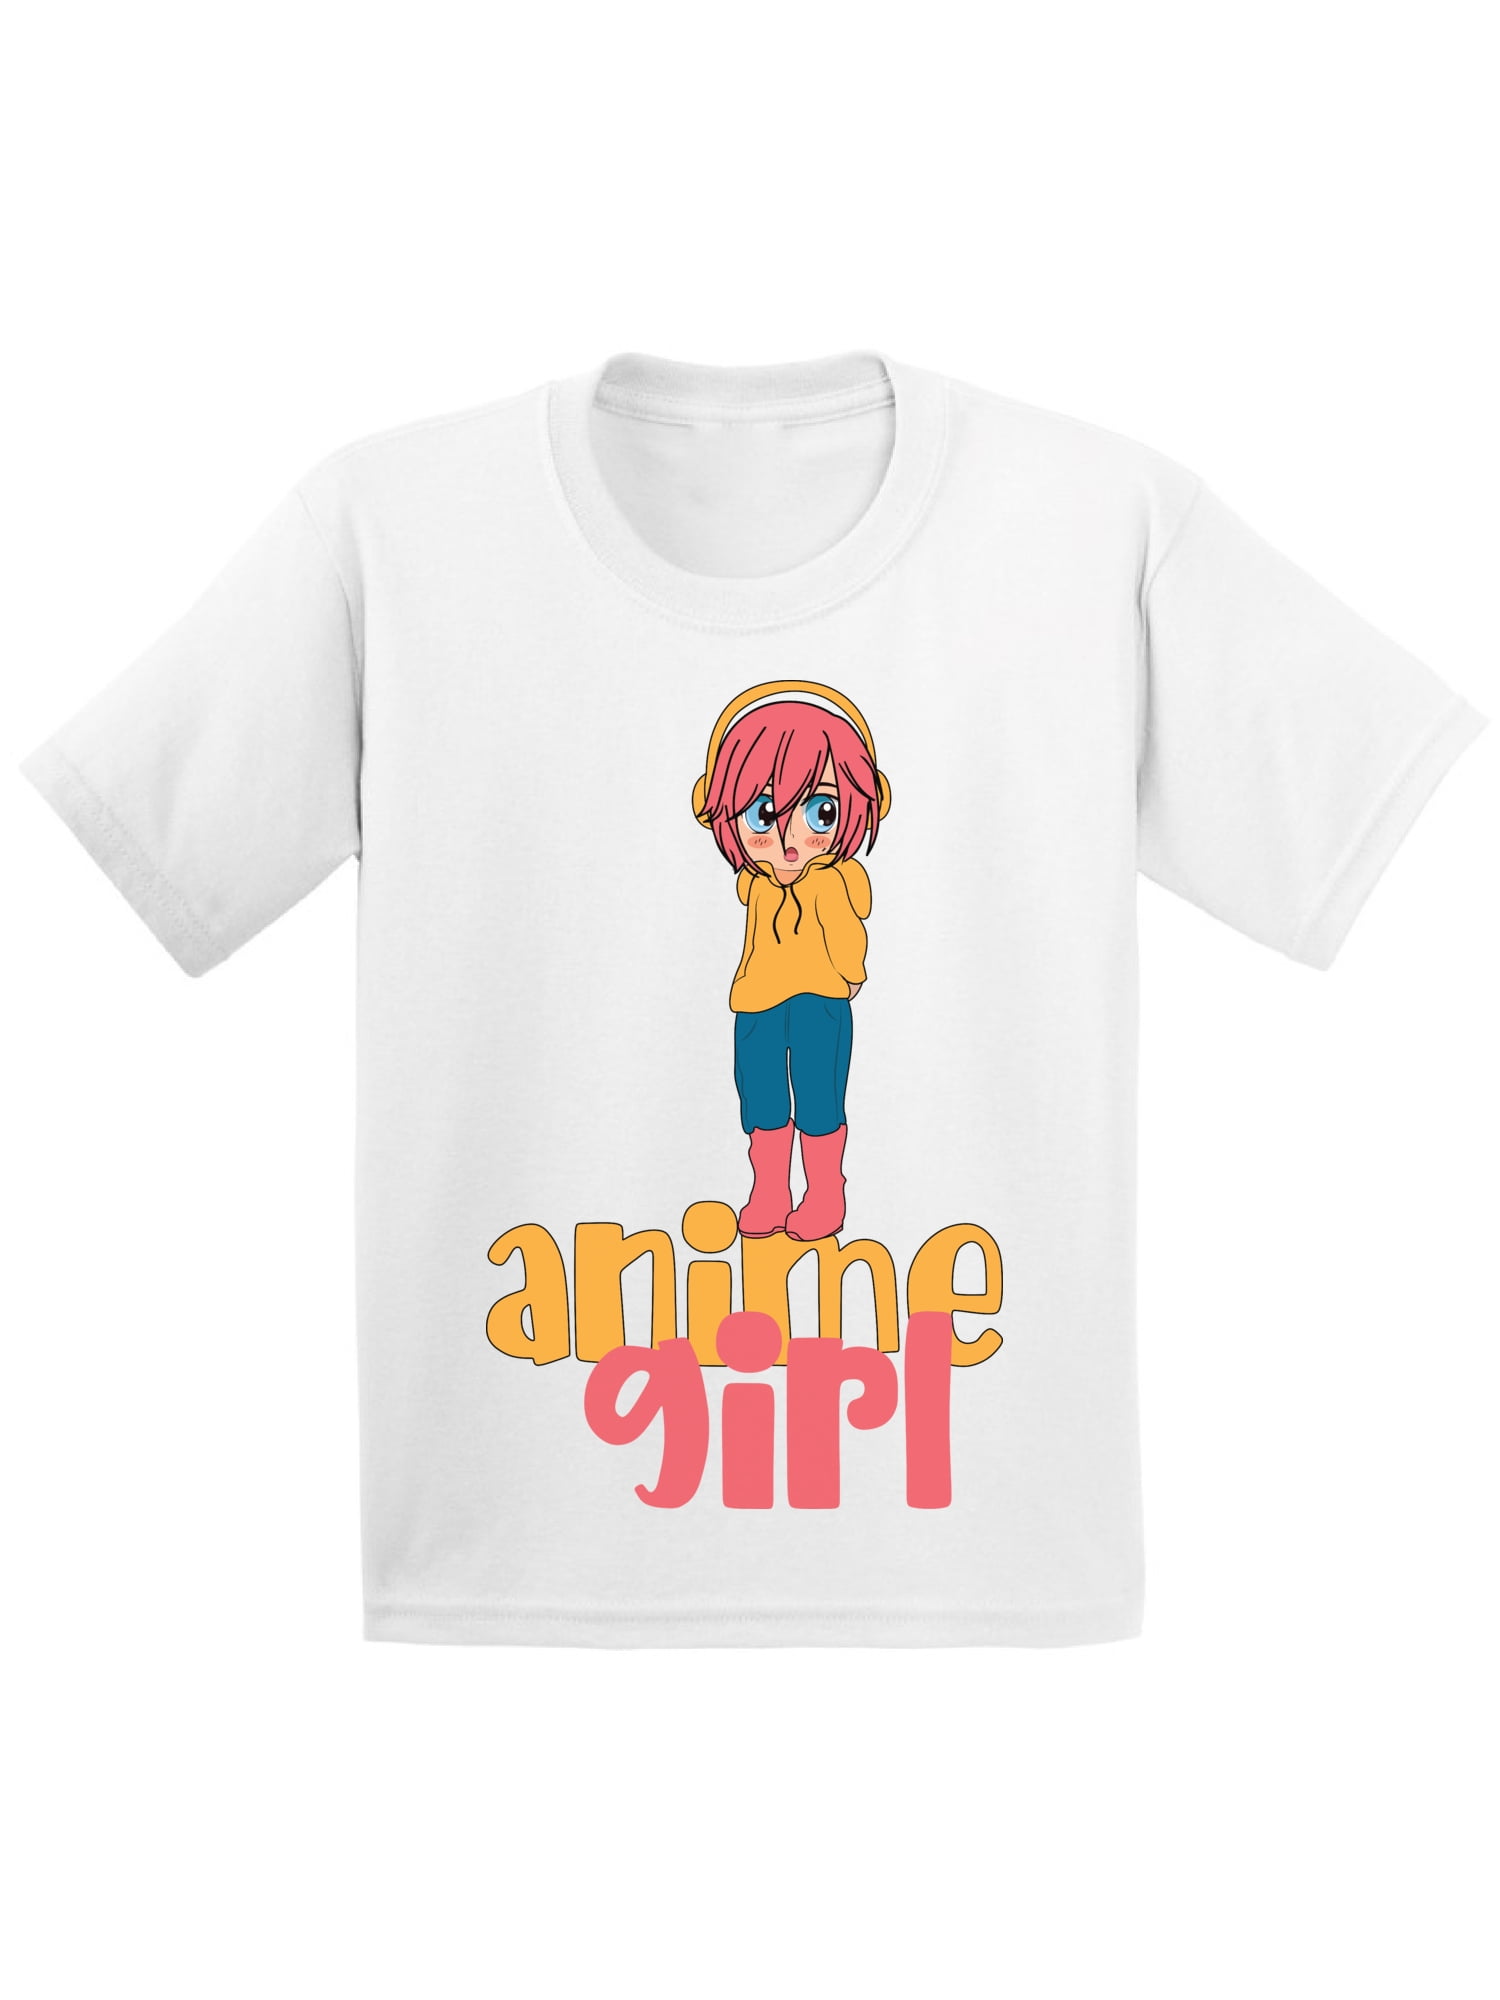 Cute anime girl Tshirt for Sale by Aikeno  Redbubble  cute tshirts   anime tshirts  manga tshirts